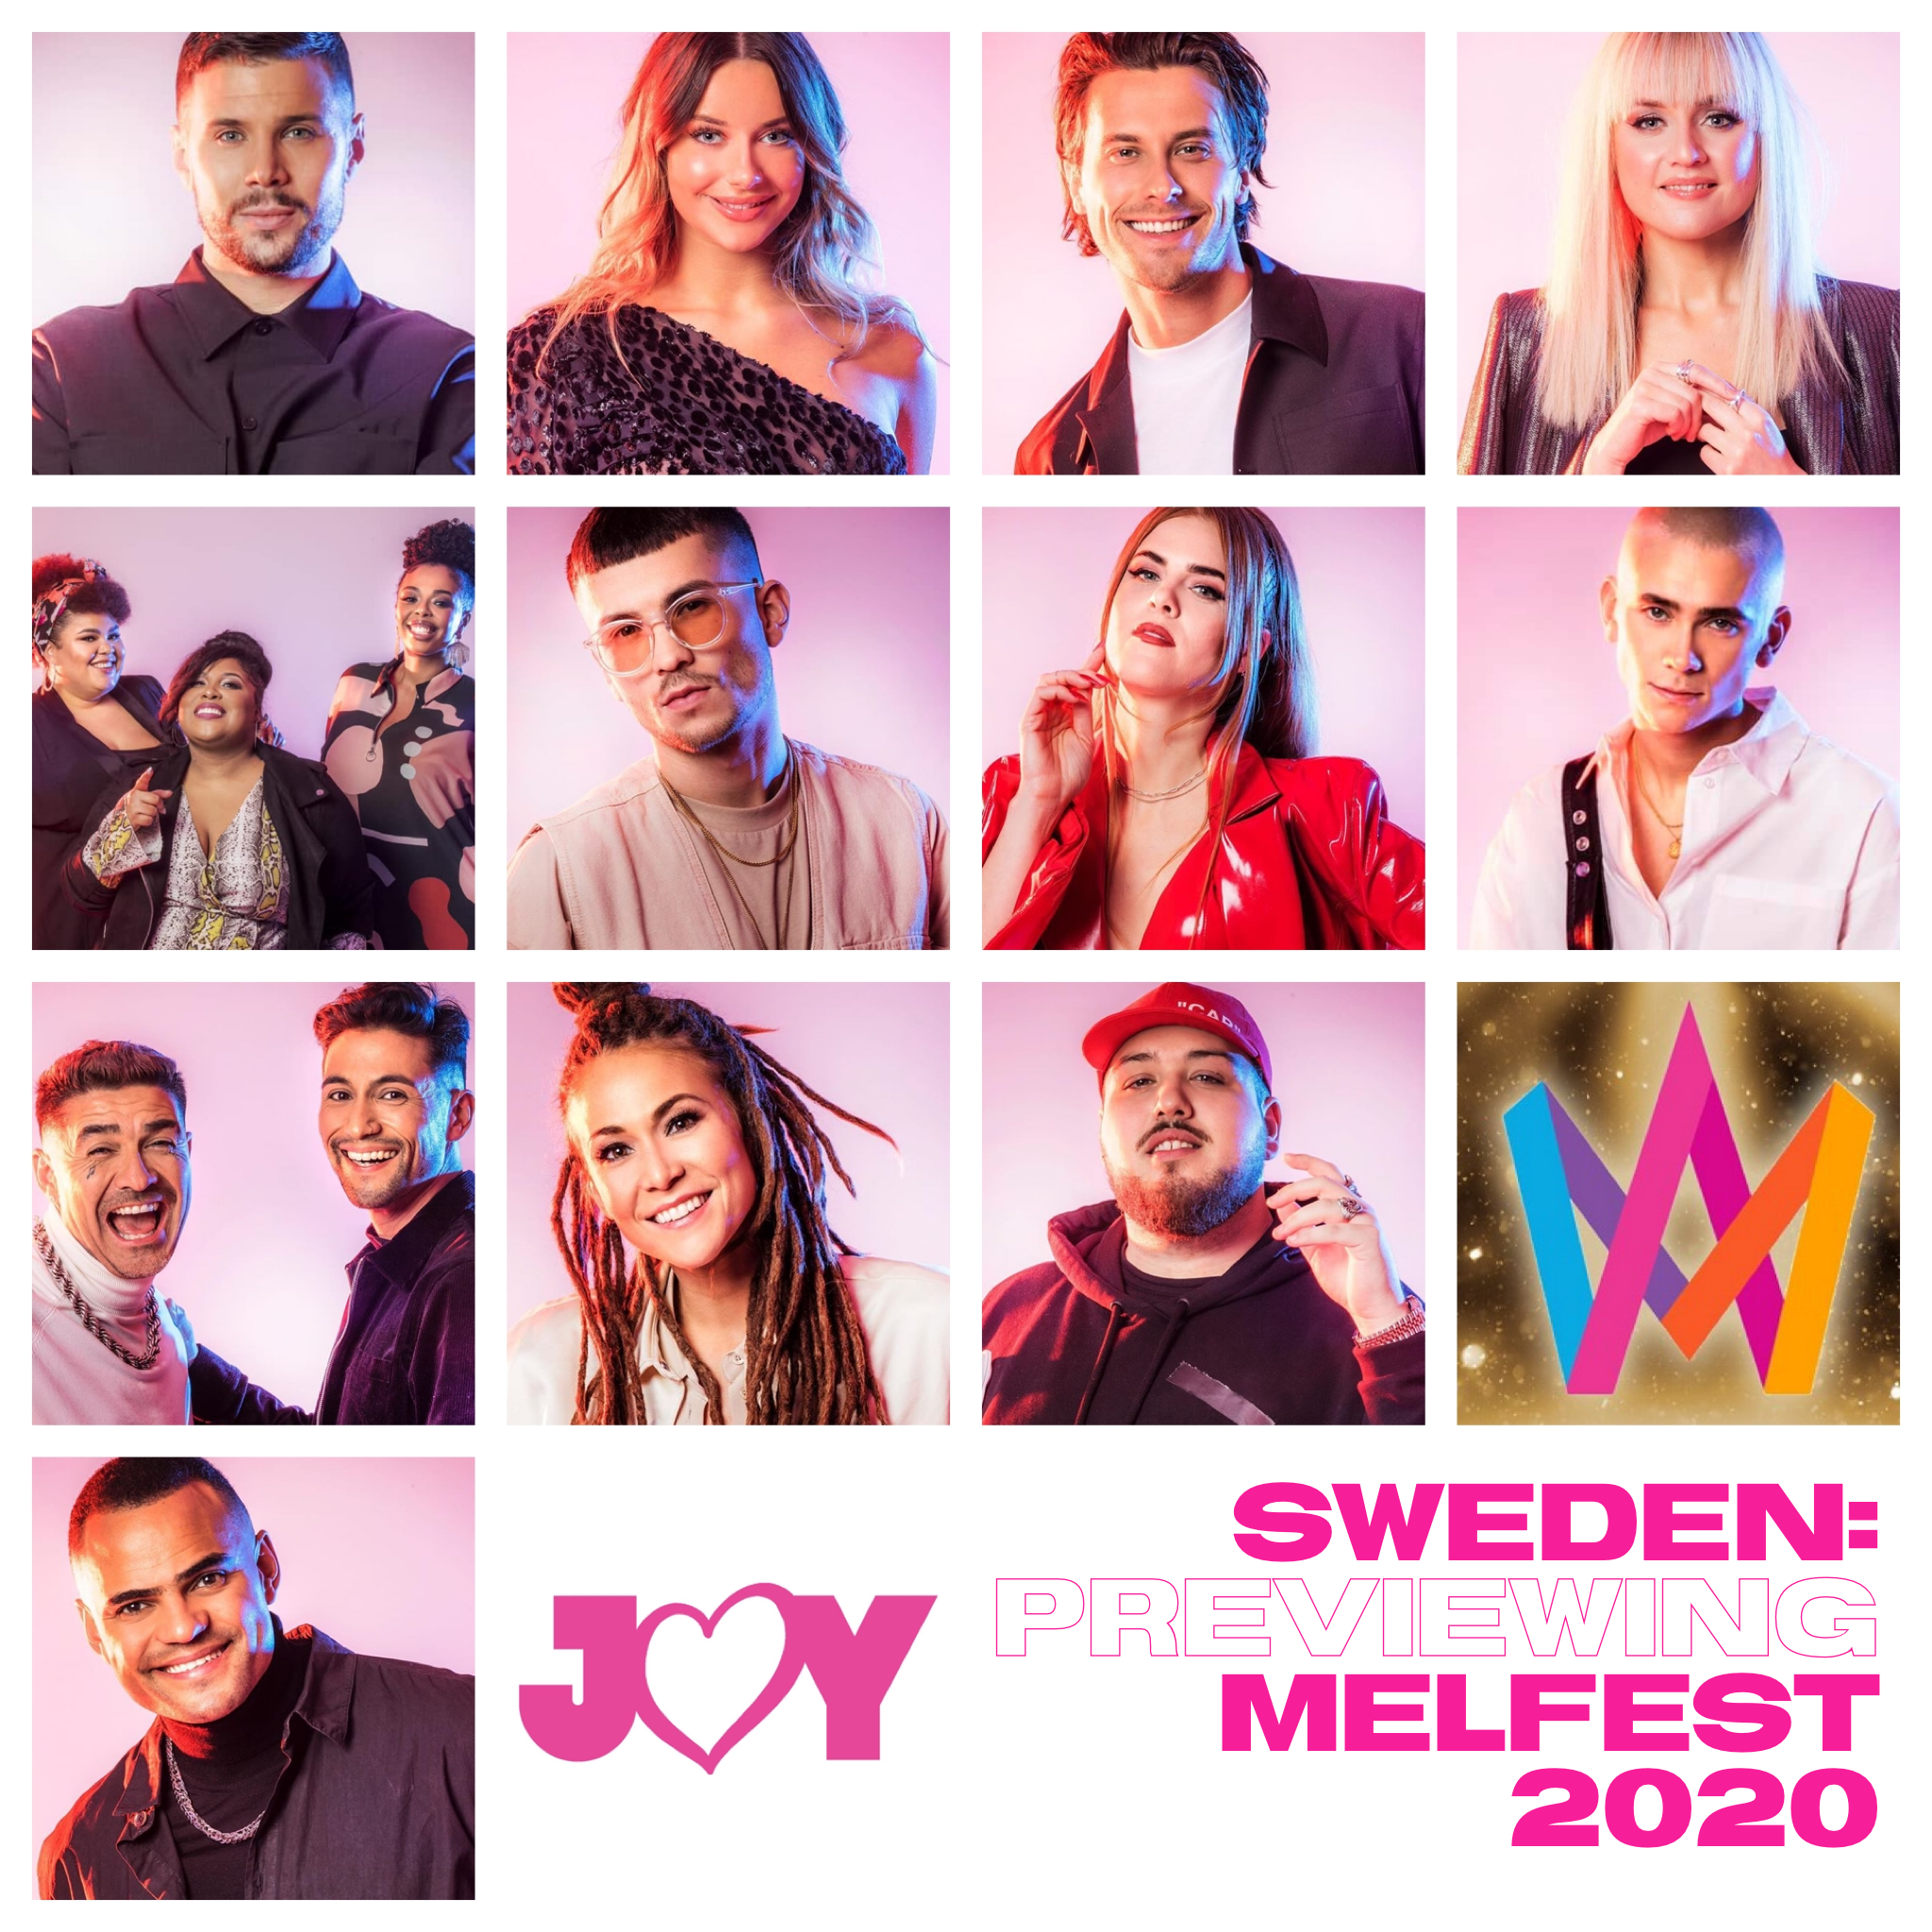 A golden Swedish anniversary: Previewing Melodifestivalen 2020